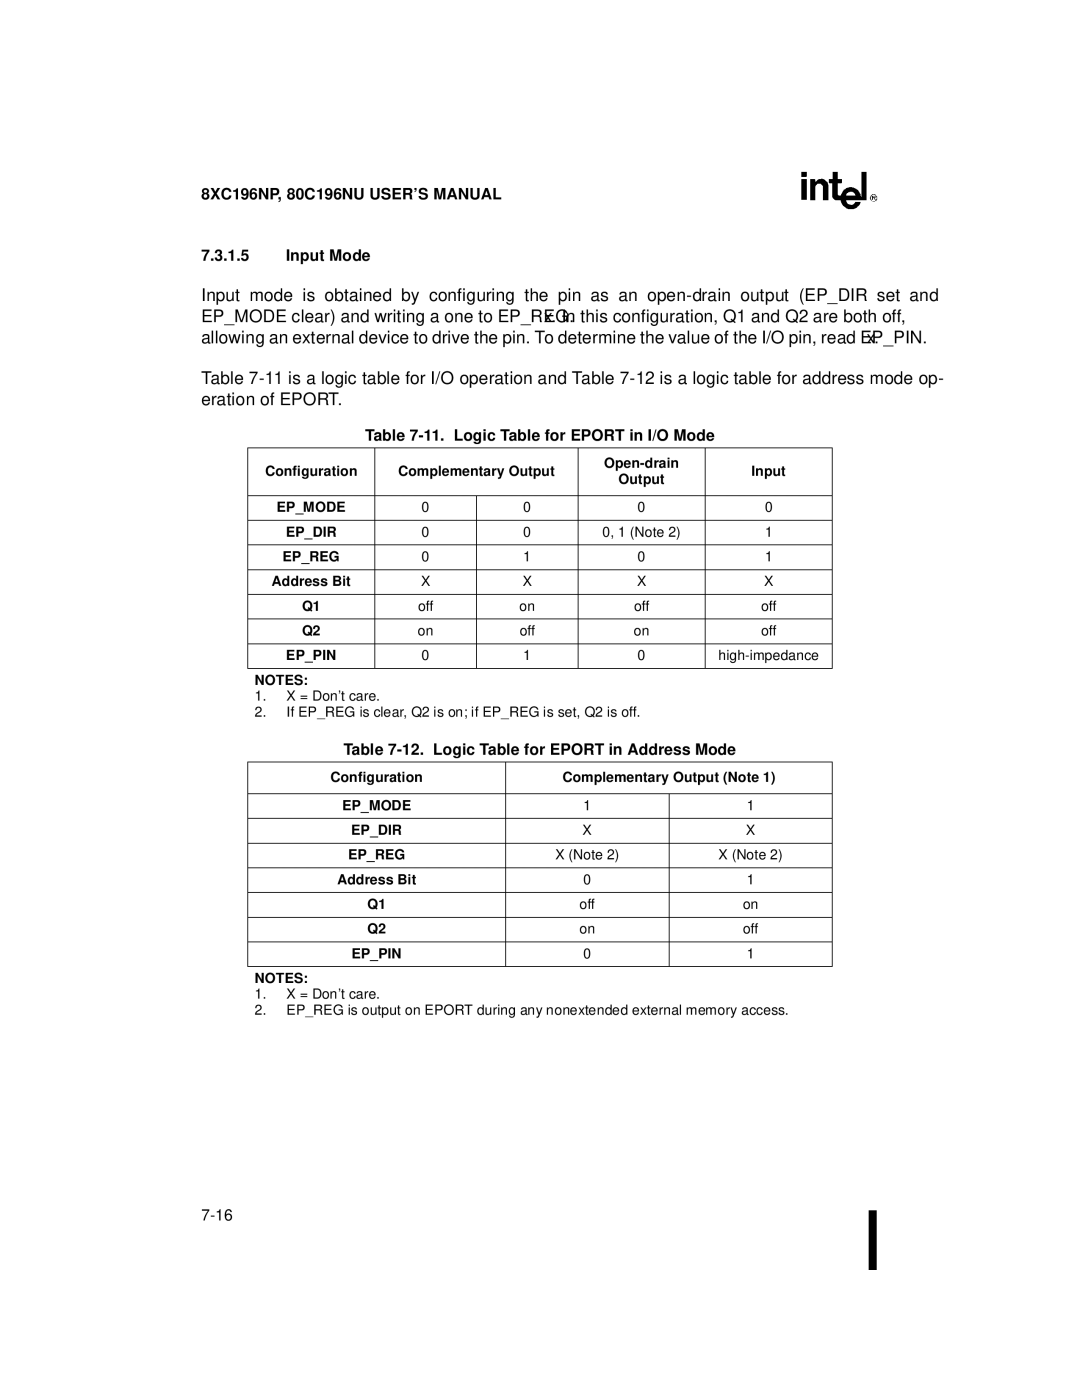 Intel Microcontroller manual Input Mode, Logic Table for Eport in I/O Mode, Logic Table for Eport in Address Mode, Eppin 